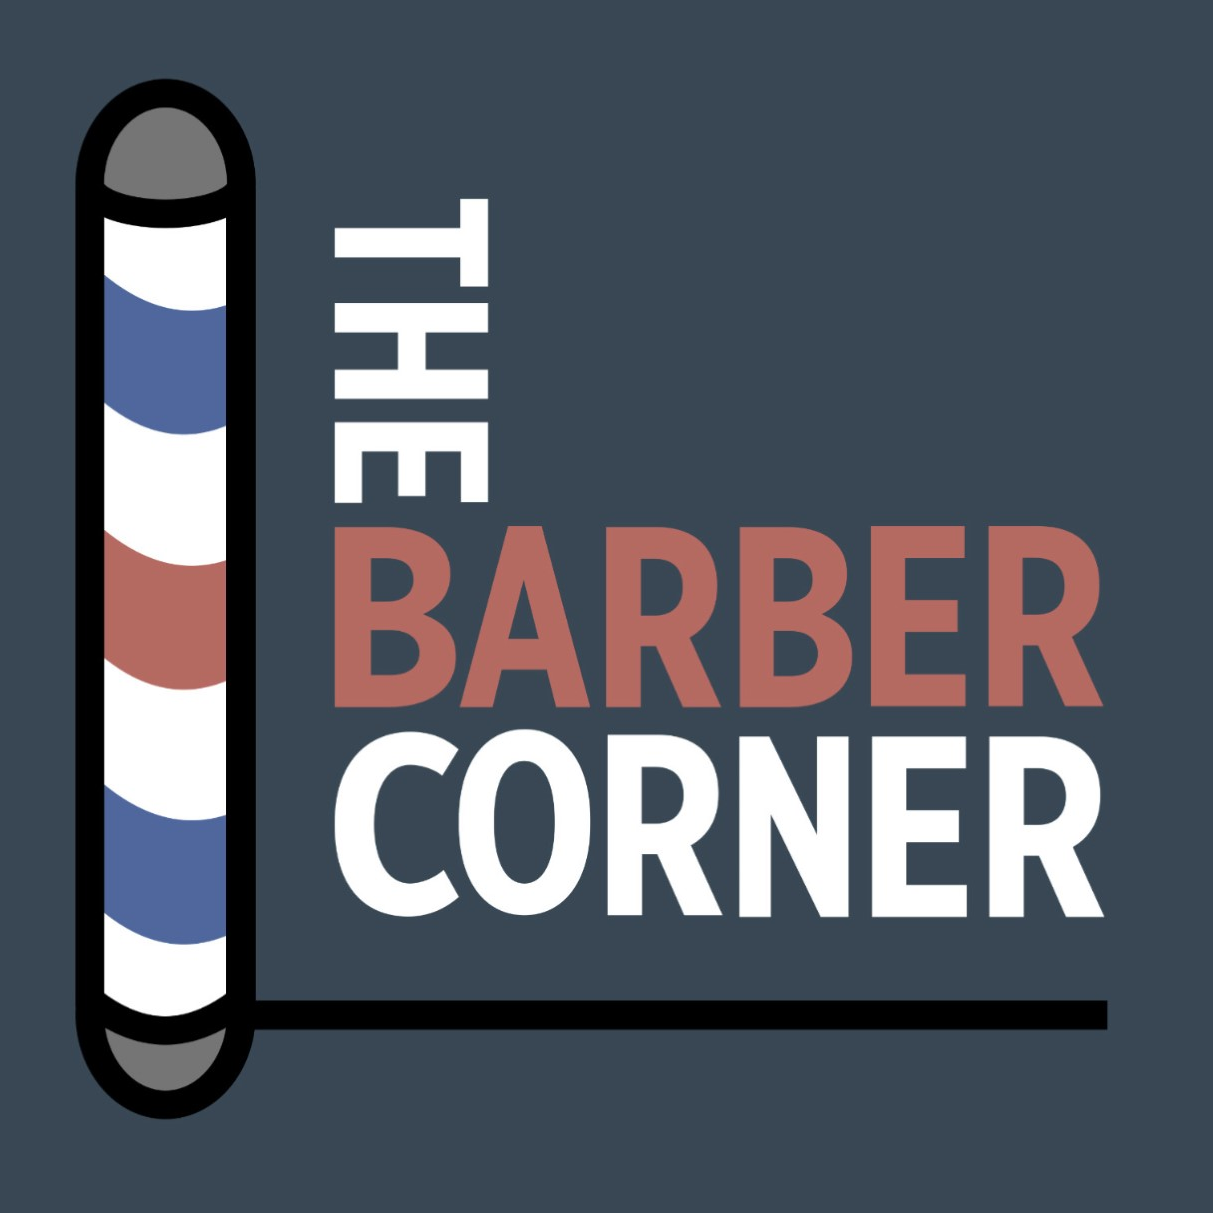 the Barber Corner logo